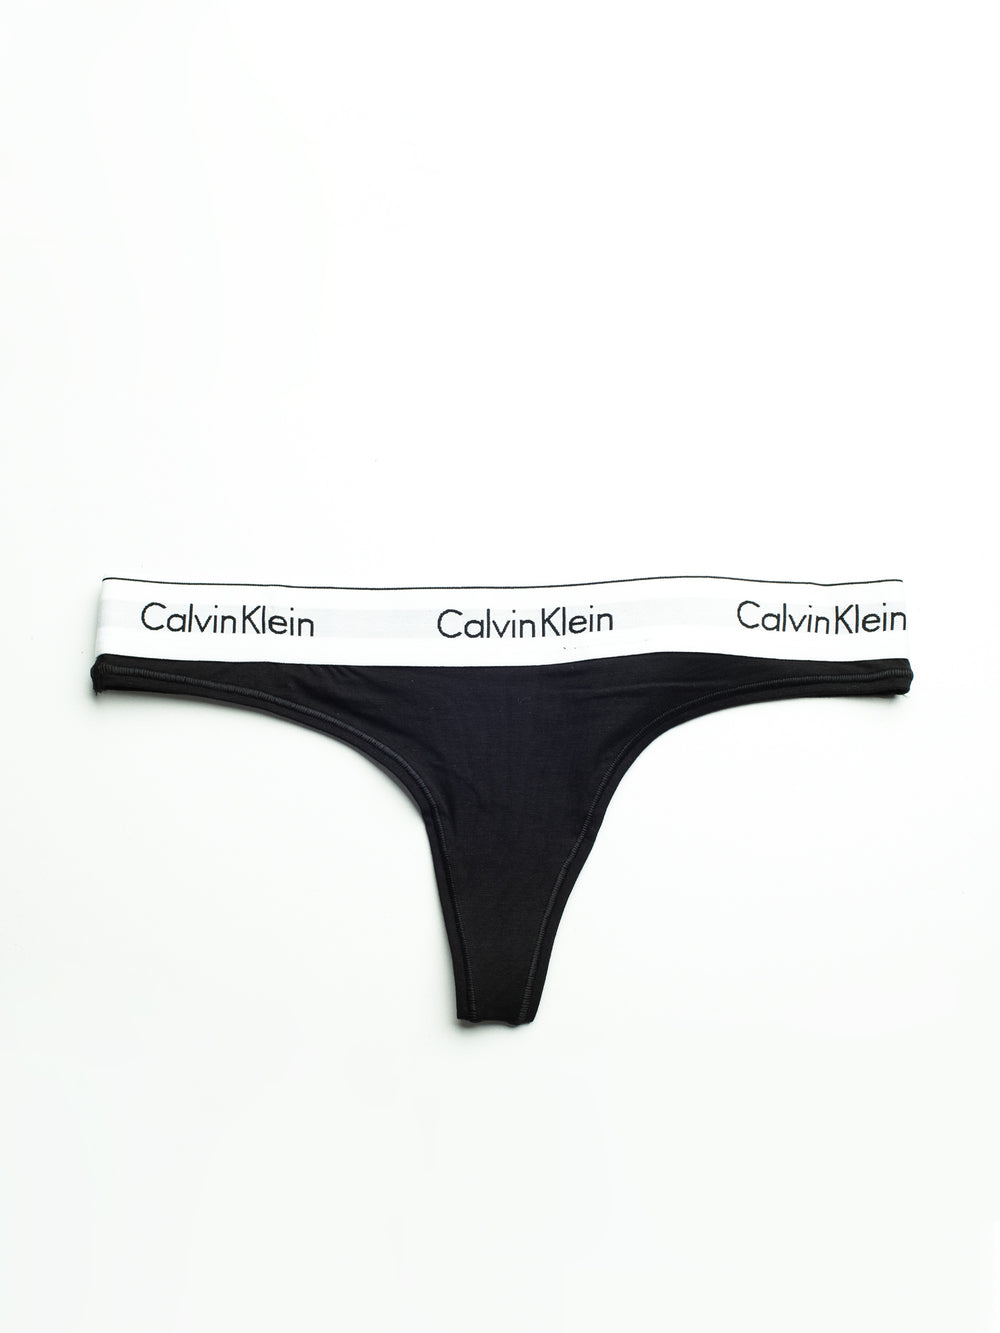 Buy Calvin Klein Carousel Thong from Next USA